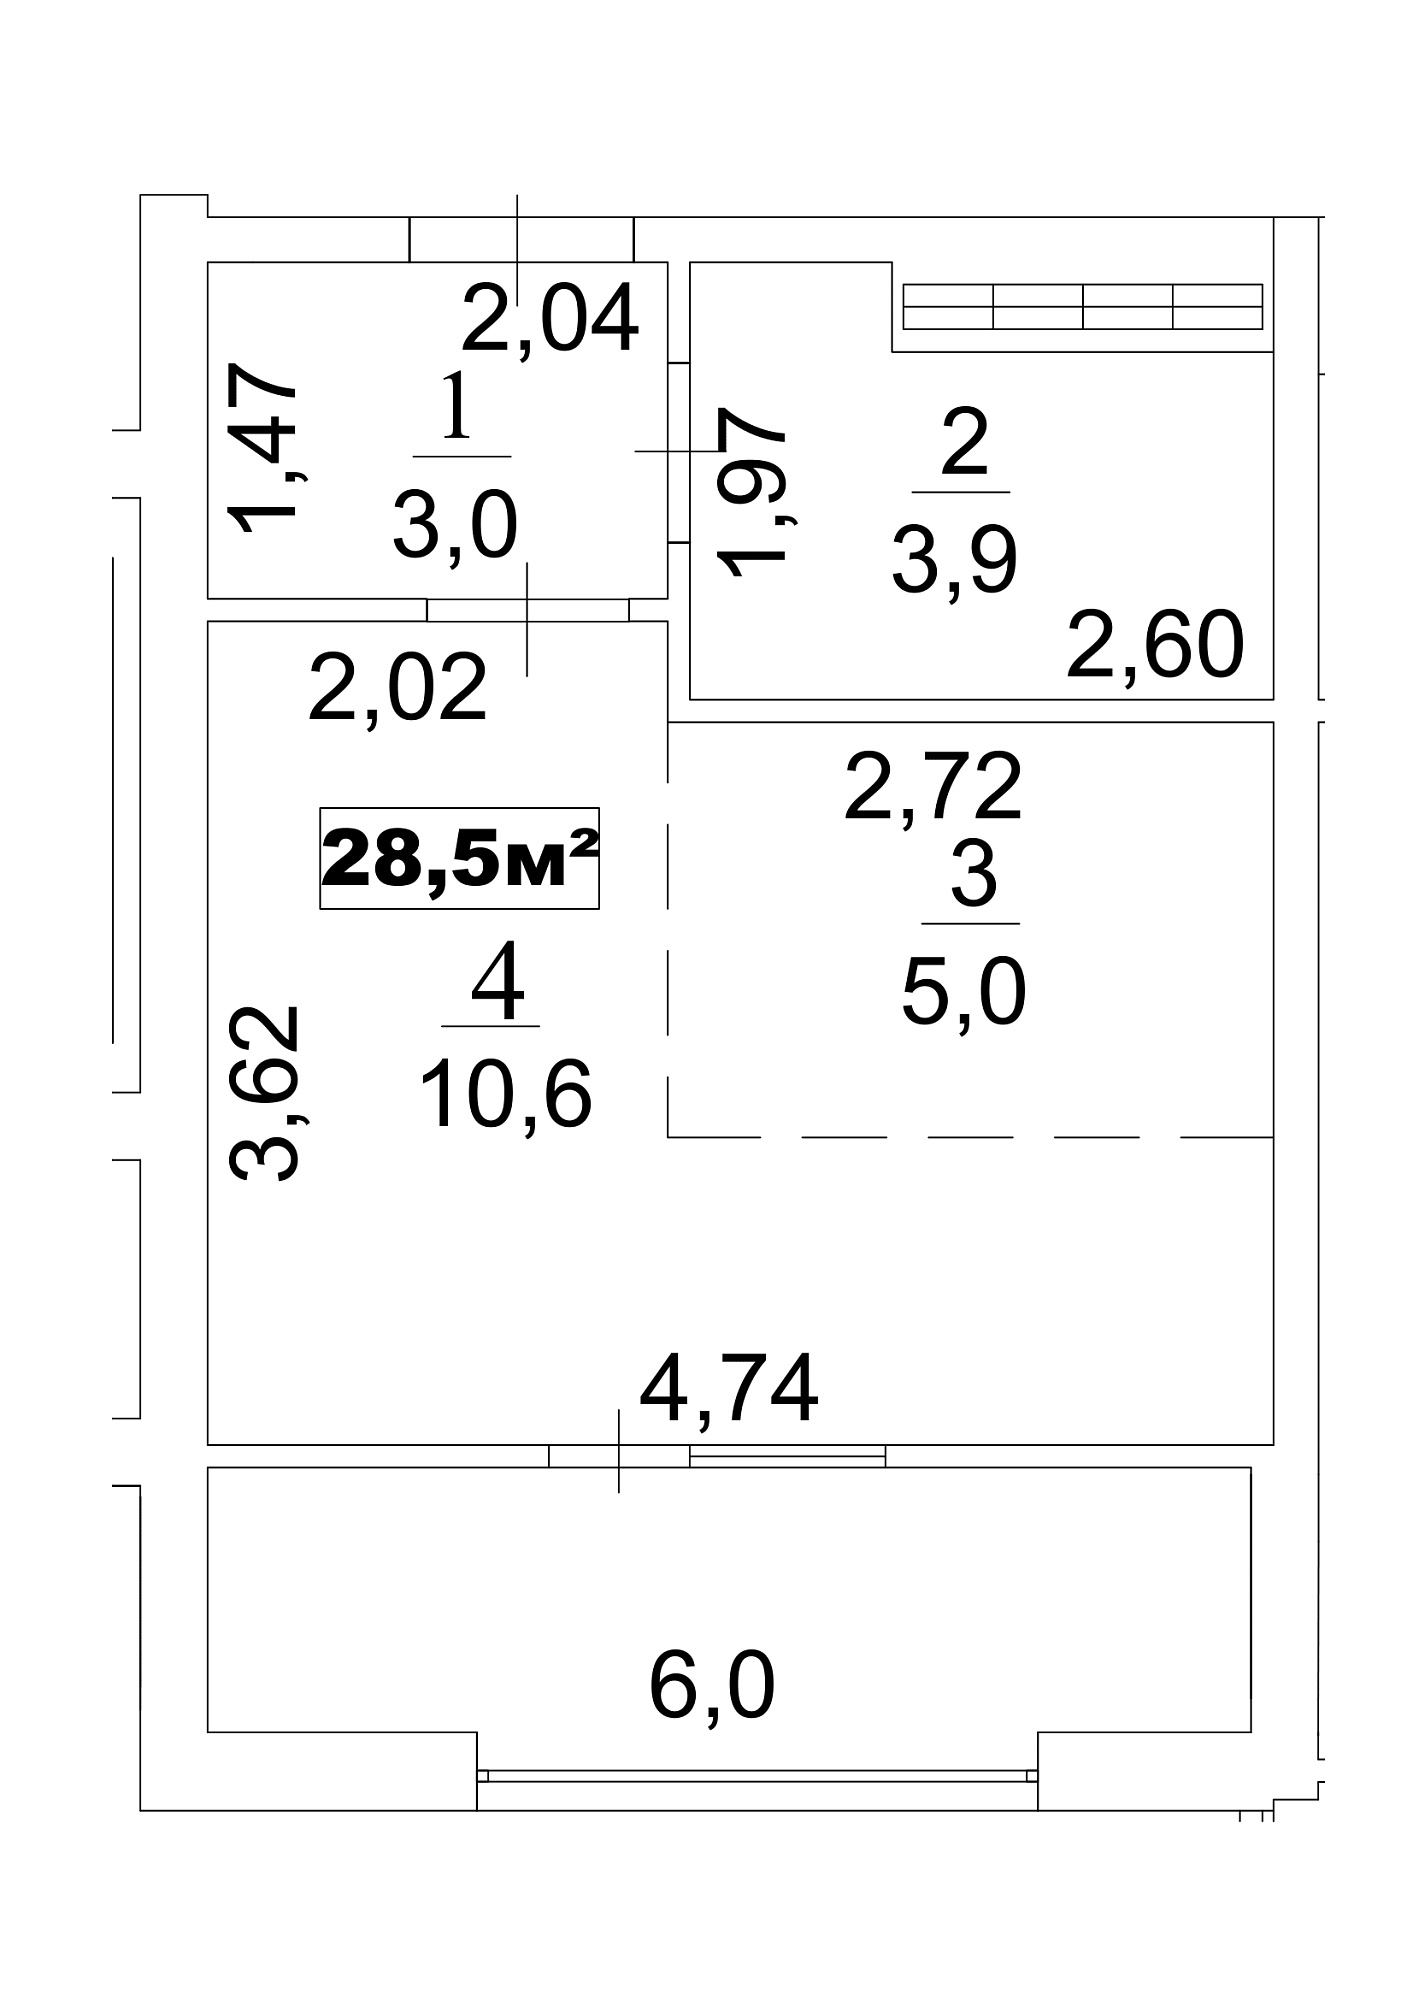 Planning Smart flats area 28.5m2, AB-13-03/00024.